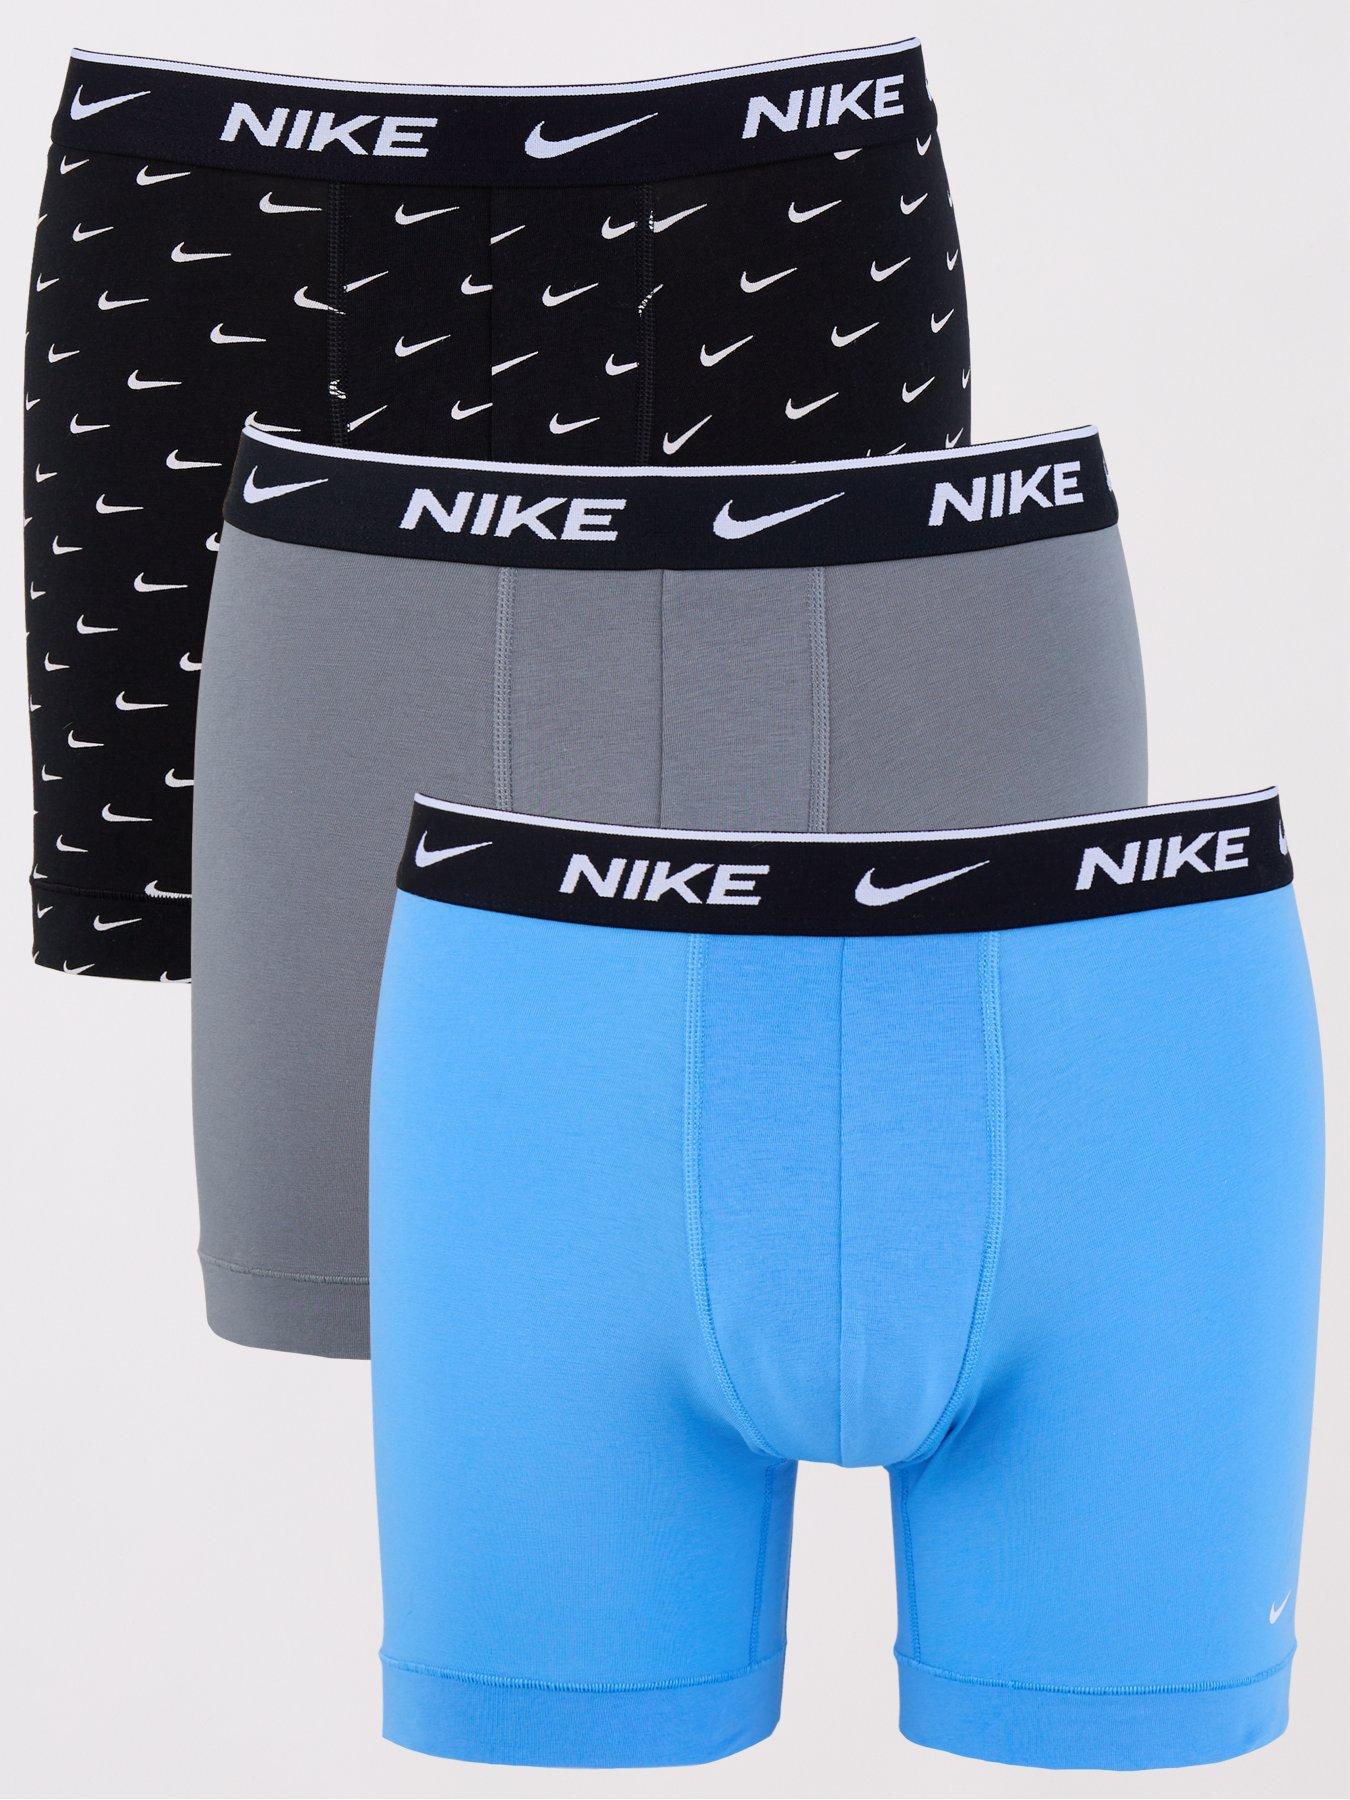 Nike Underwear Nike Everyday Stretch 3PK Boxer Briefs Mens M Black Blue  Gray NEW 